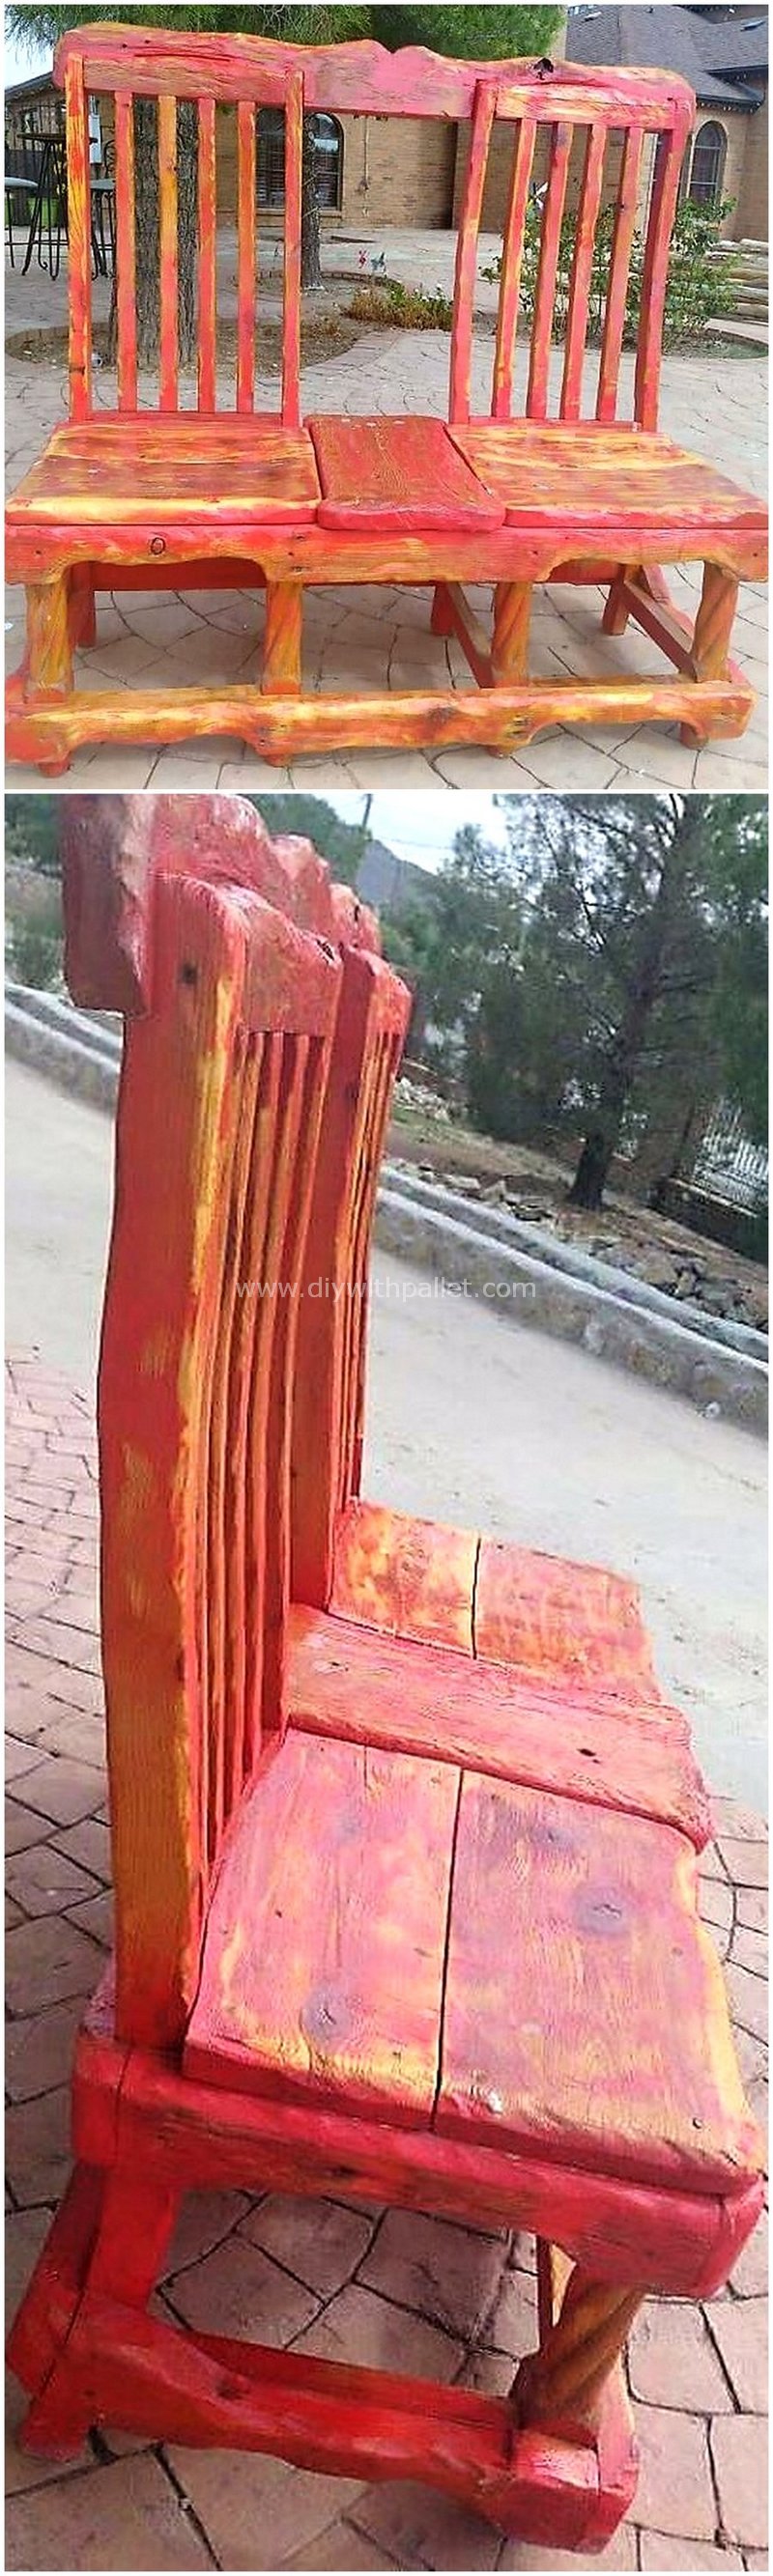 wooden pallet chair bench